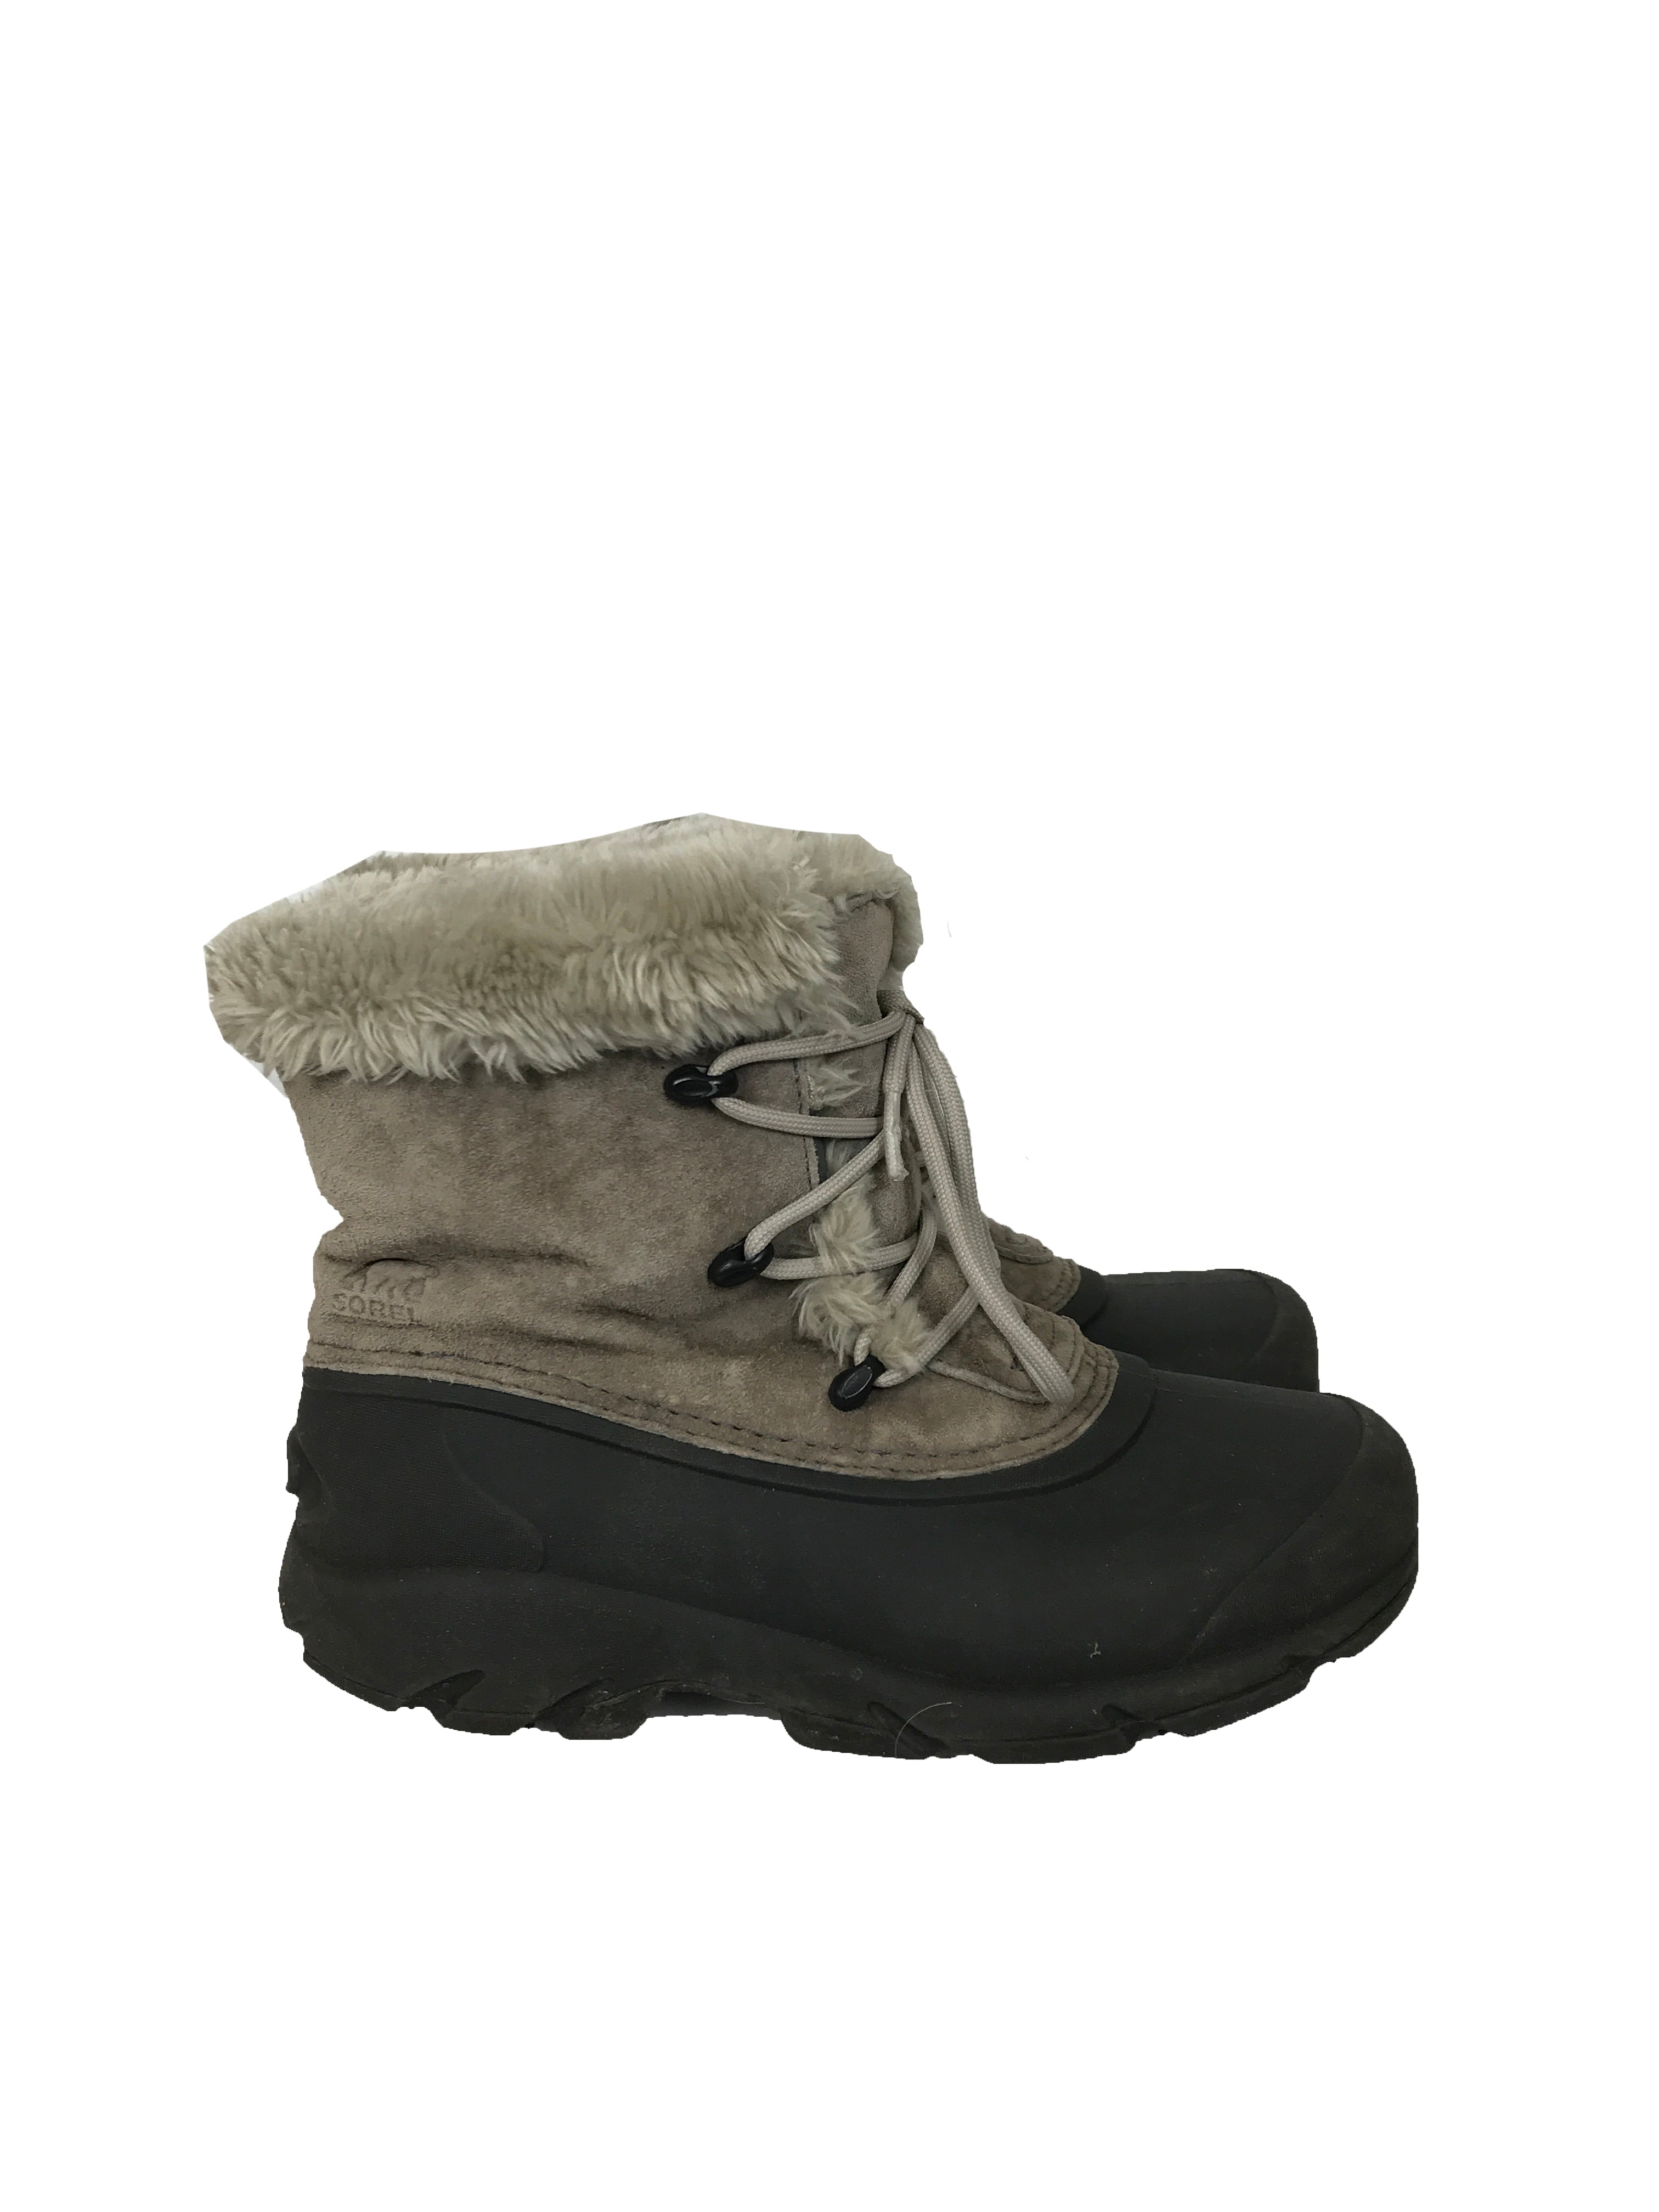 Sorel Grey Winter Boots Women's Size 6